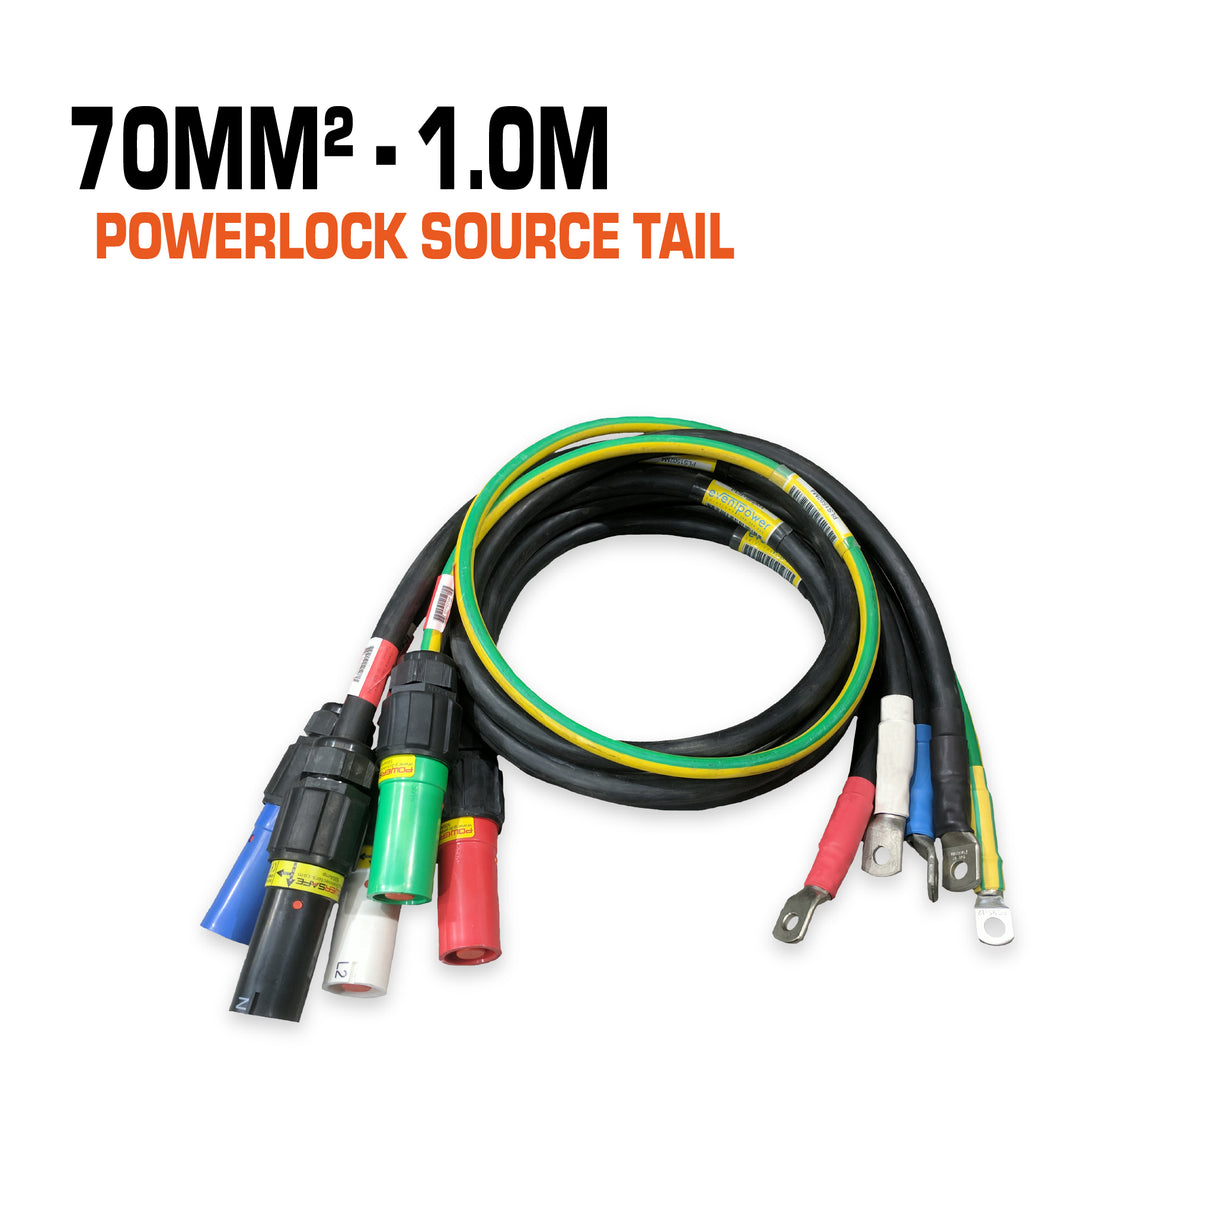 POWERLOCK Source Tails 70mm² 1m